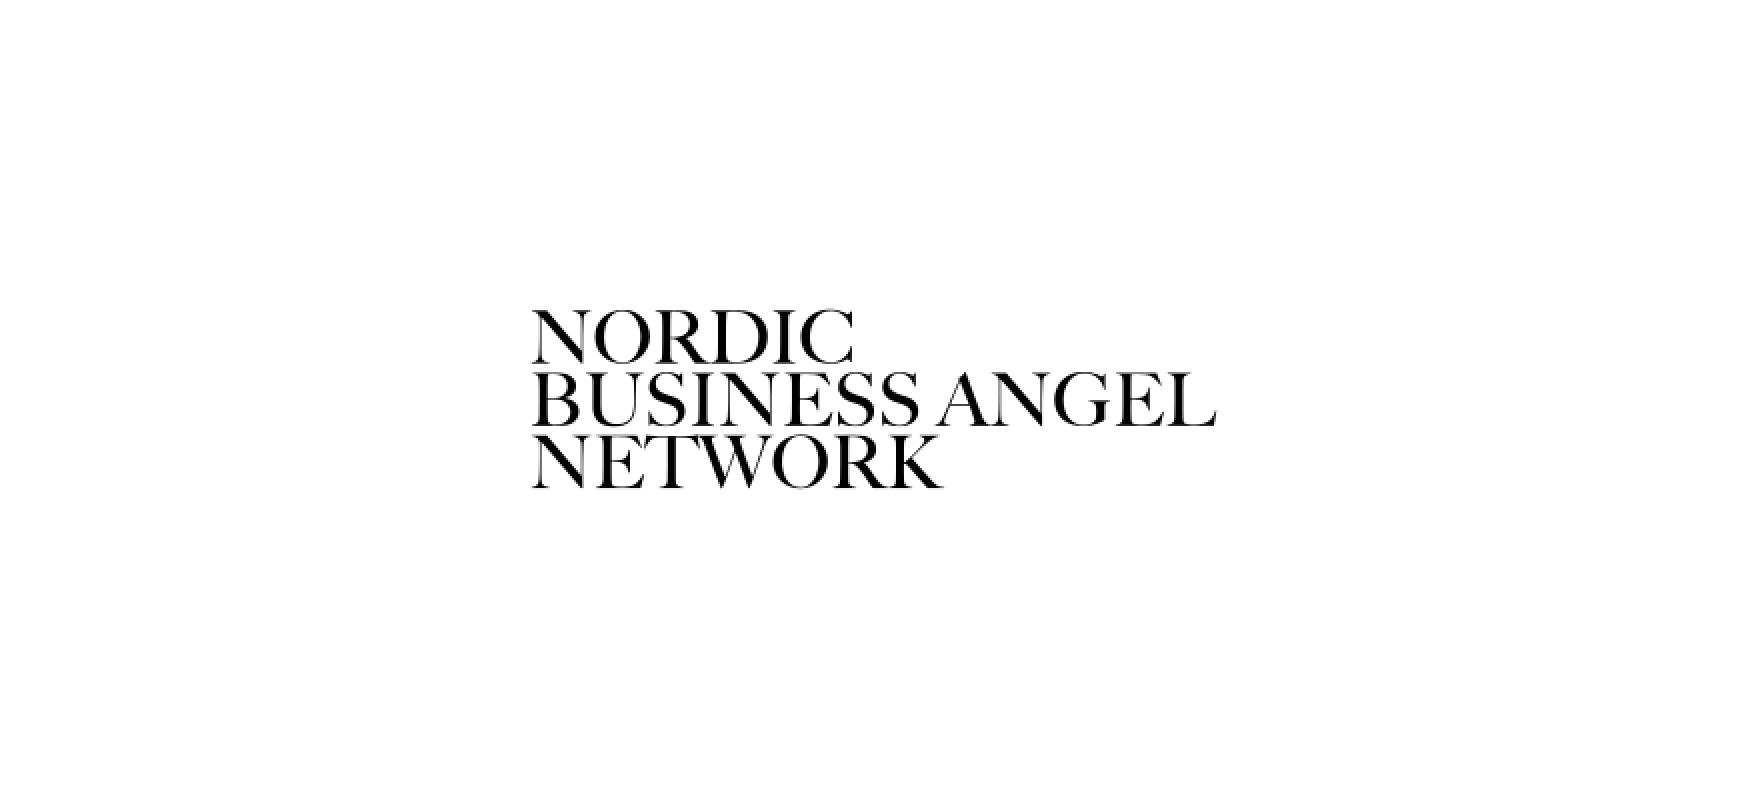 Nordic Business Angel Network logo 